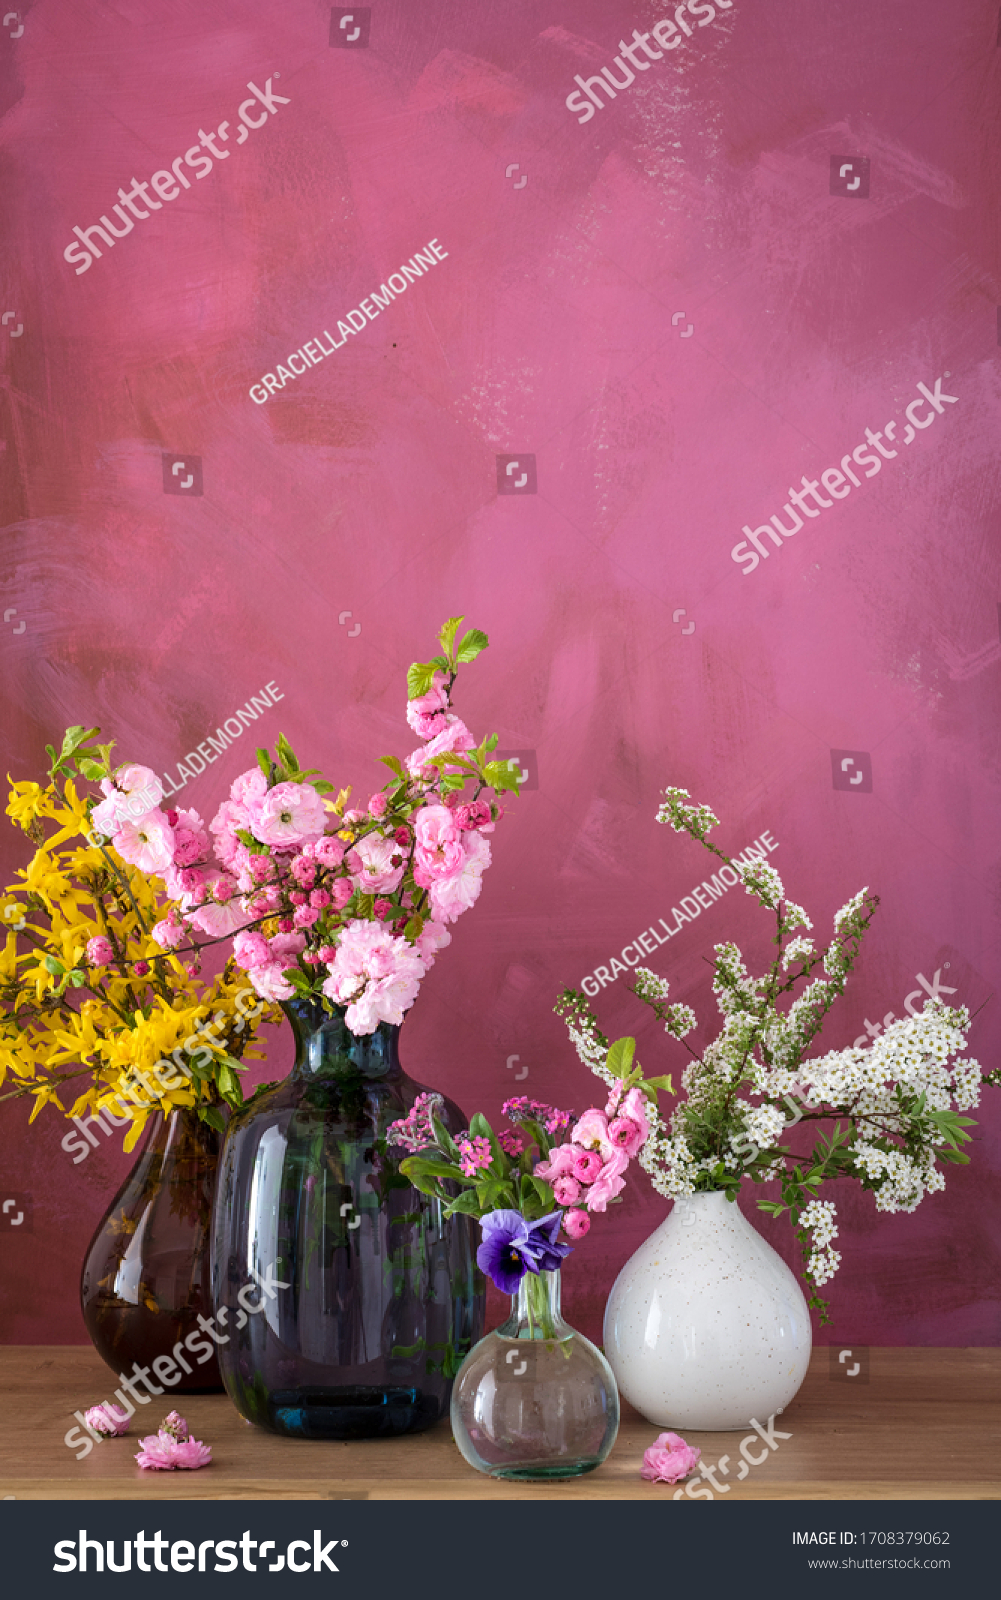 Flowers in transparent vase Images, Stock Photos & Vectors 